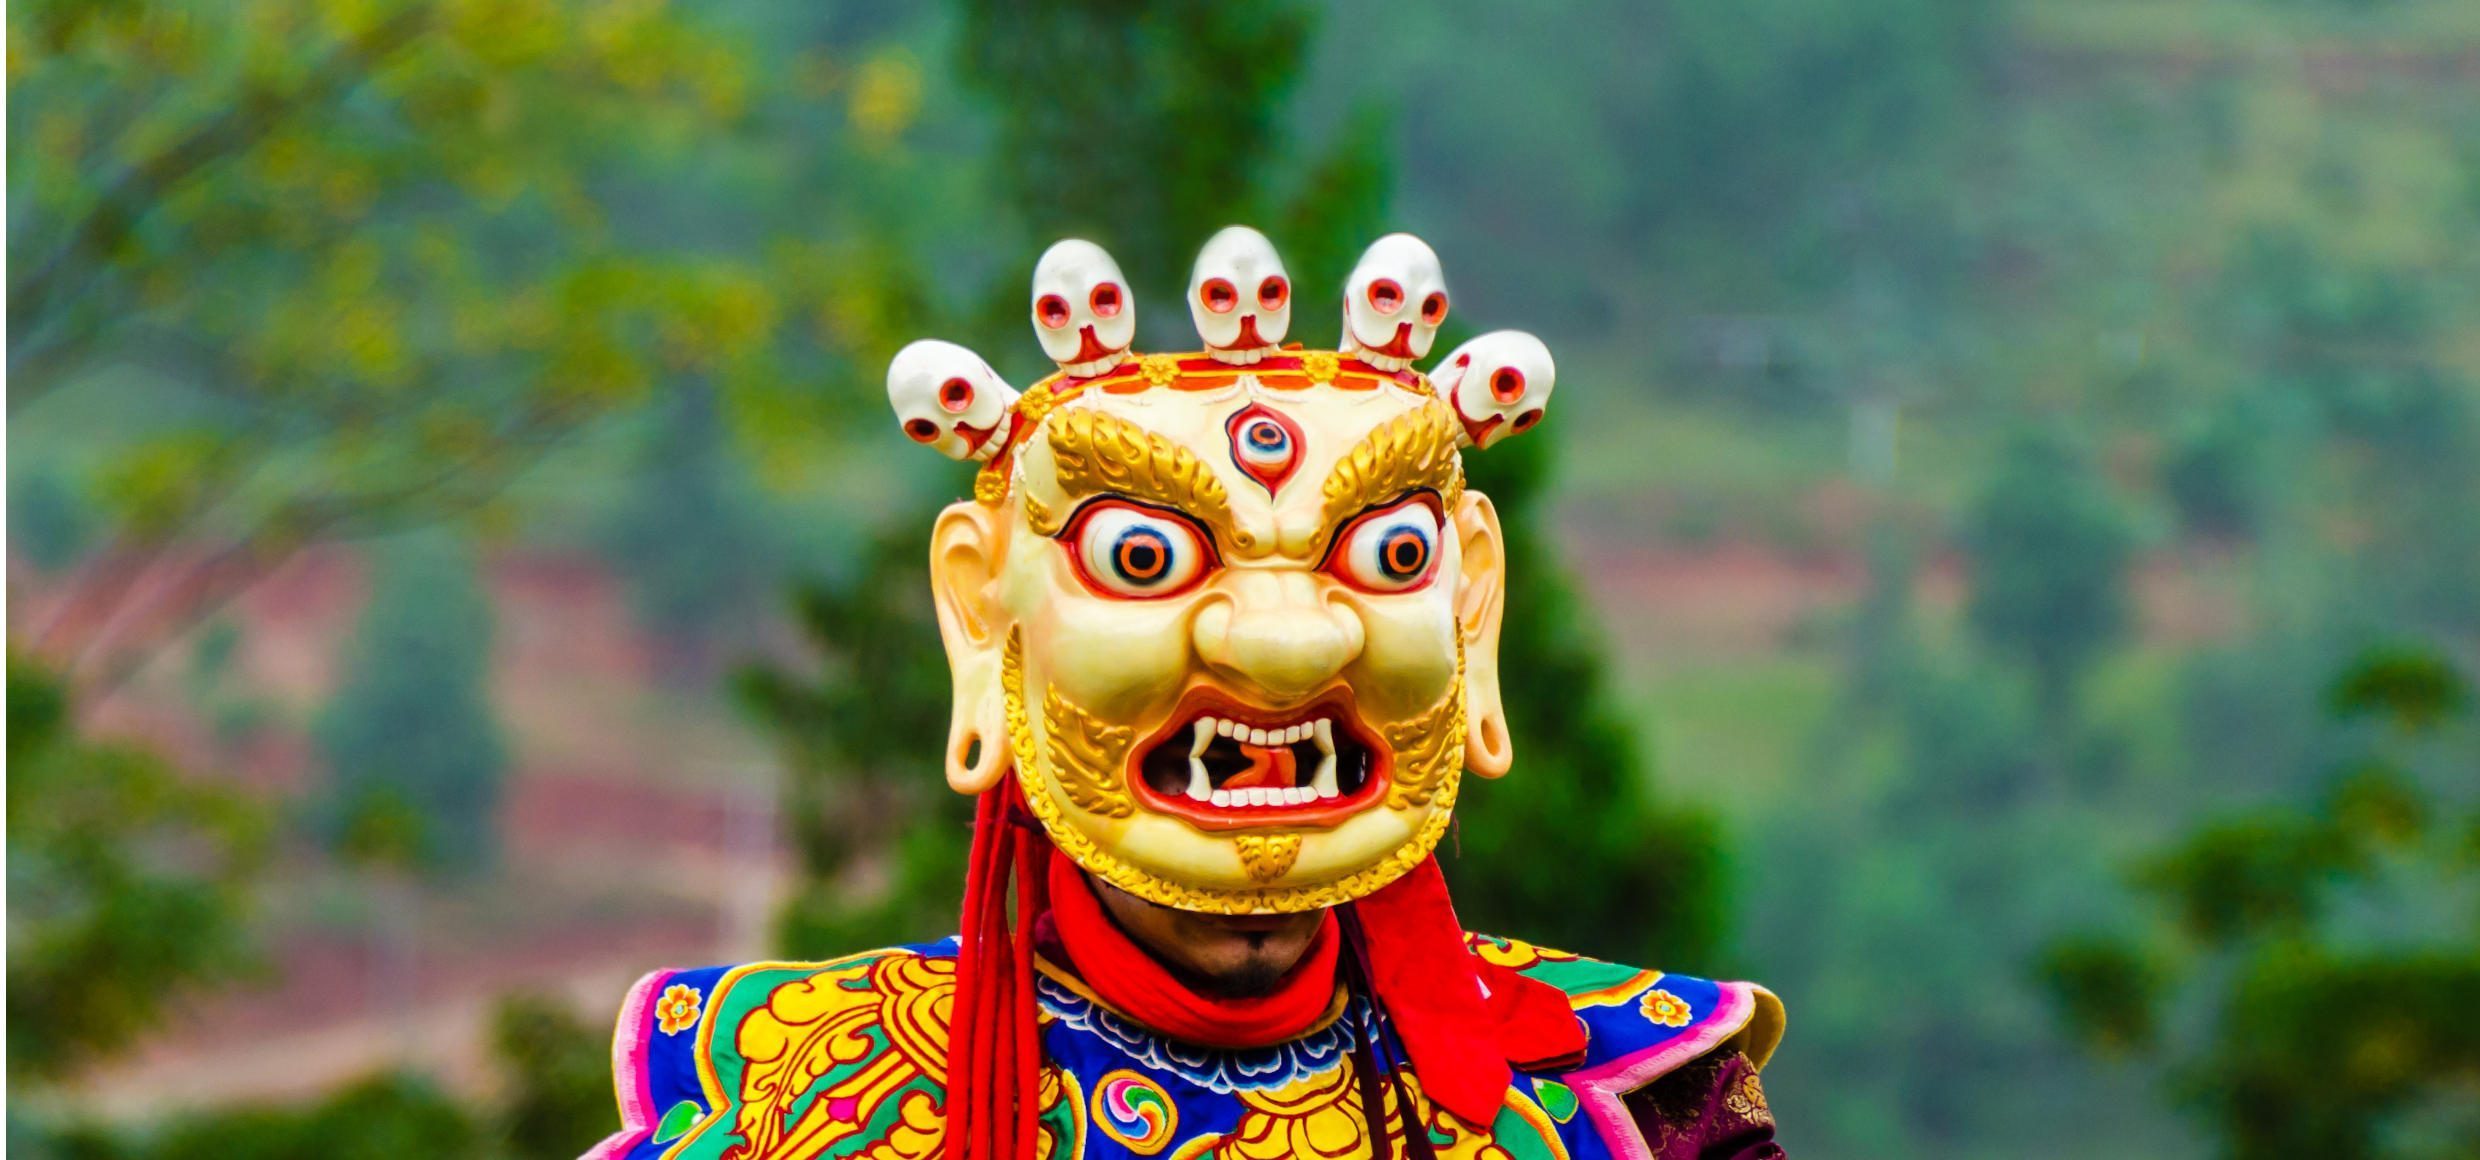 Bhutan-Klosterfestival-Tradition